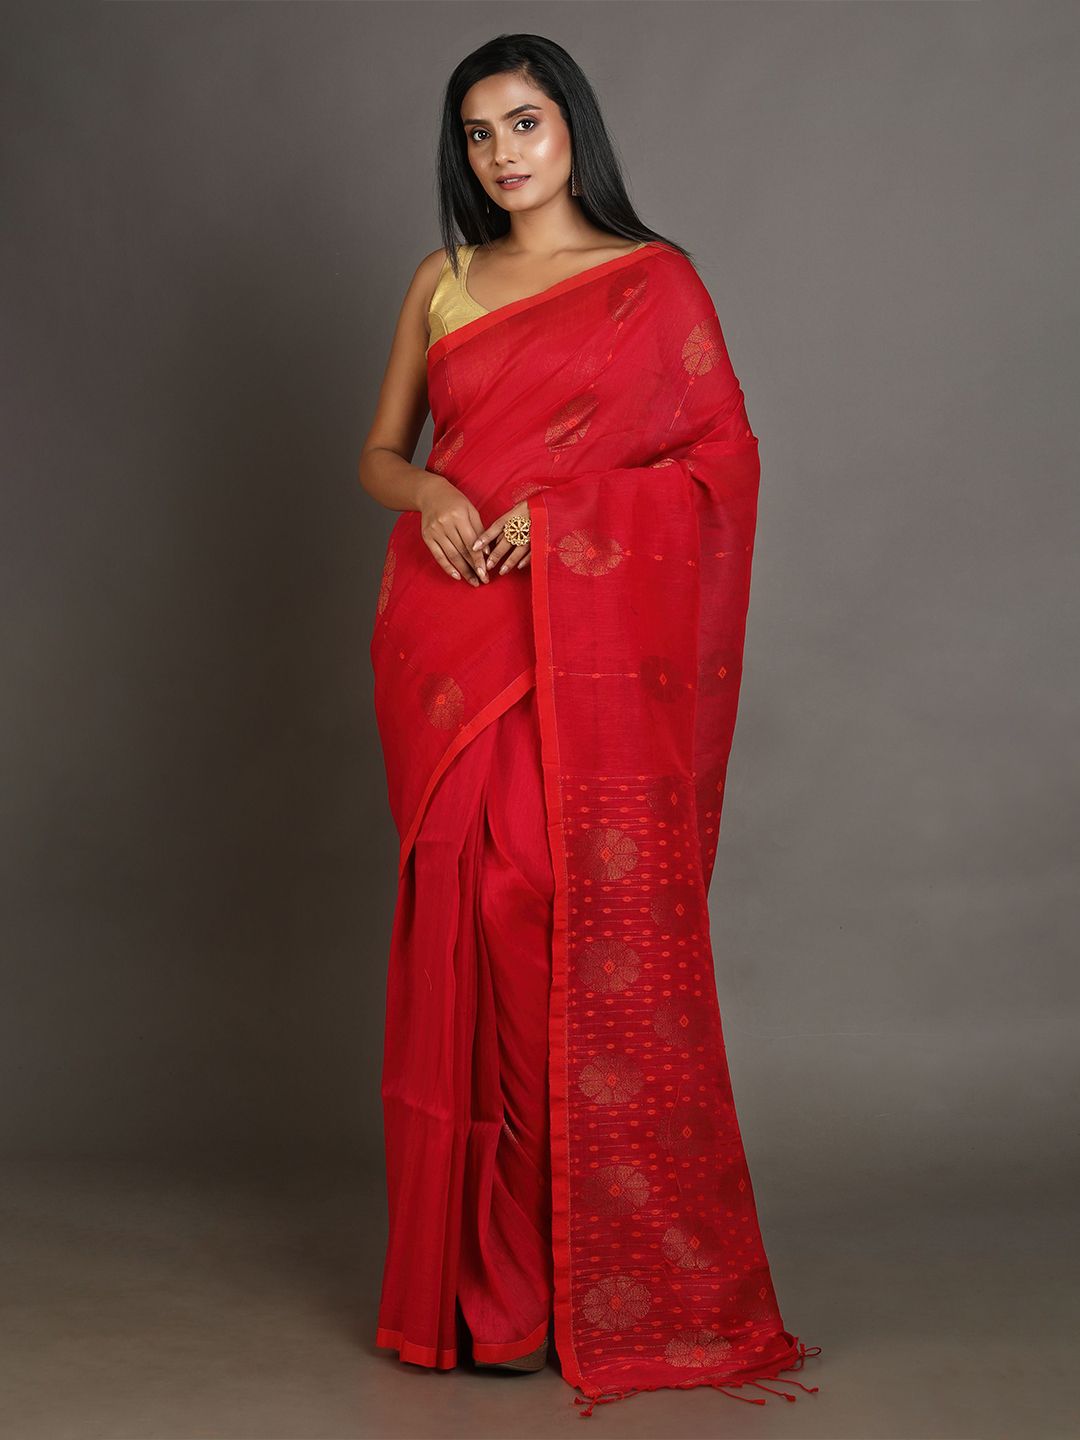 Arhi Red Woven Design Pure Linen Saree Price in India